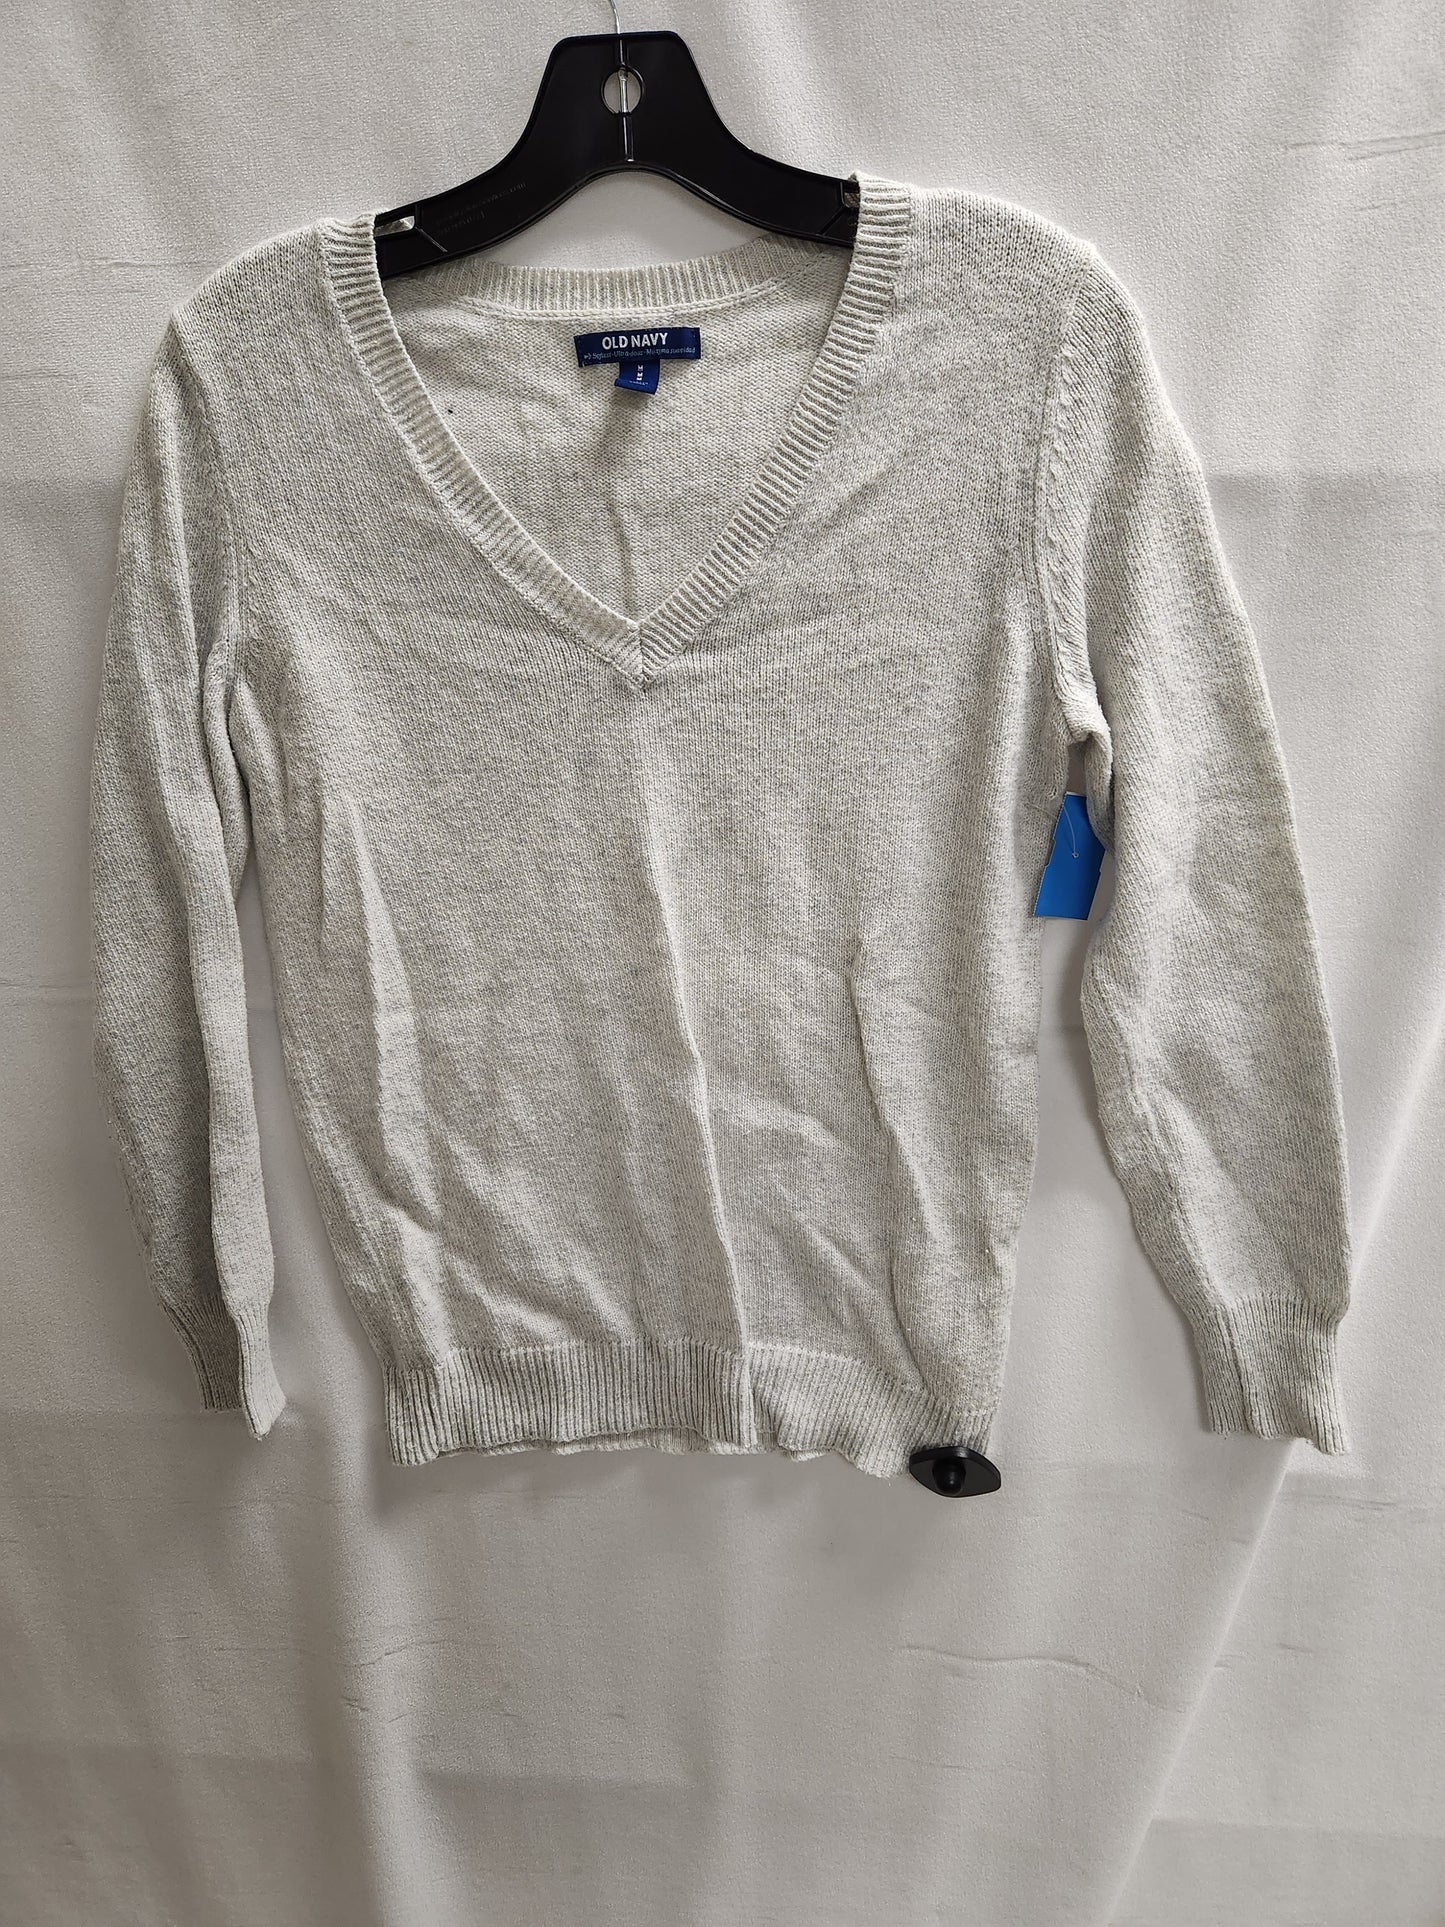 Sweatshirt Crewneck By Old Navy  Size: M